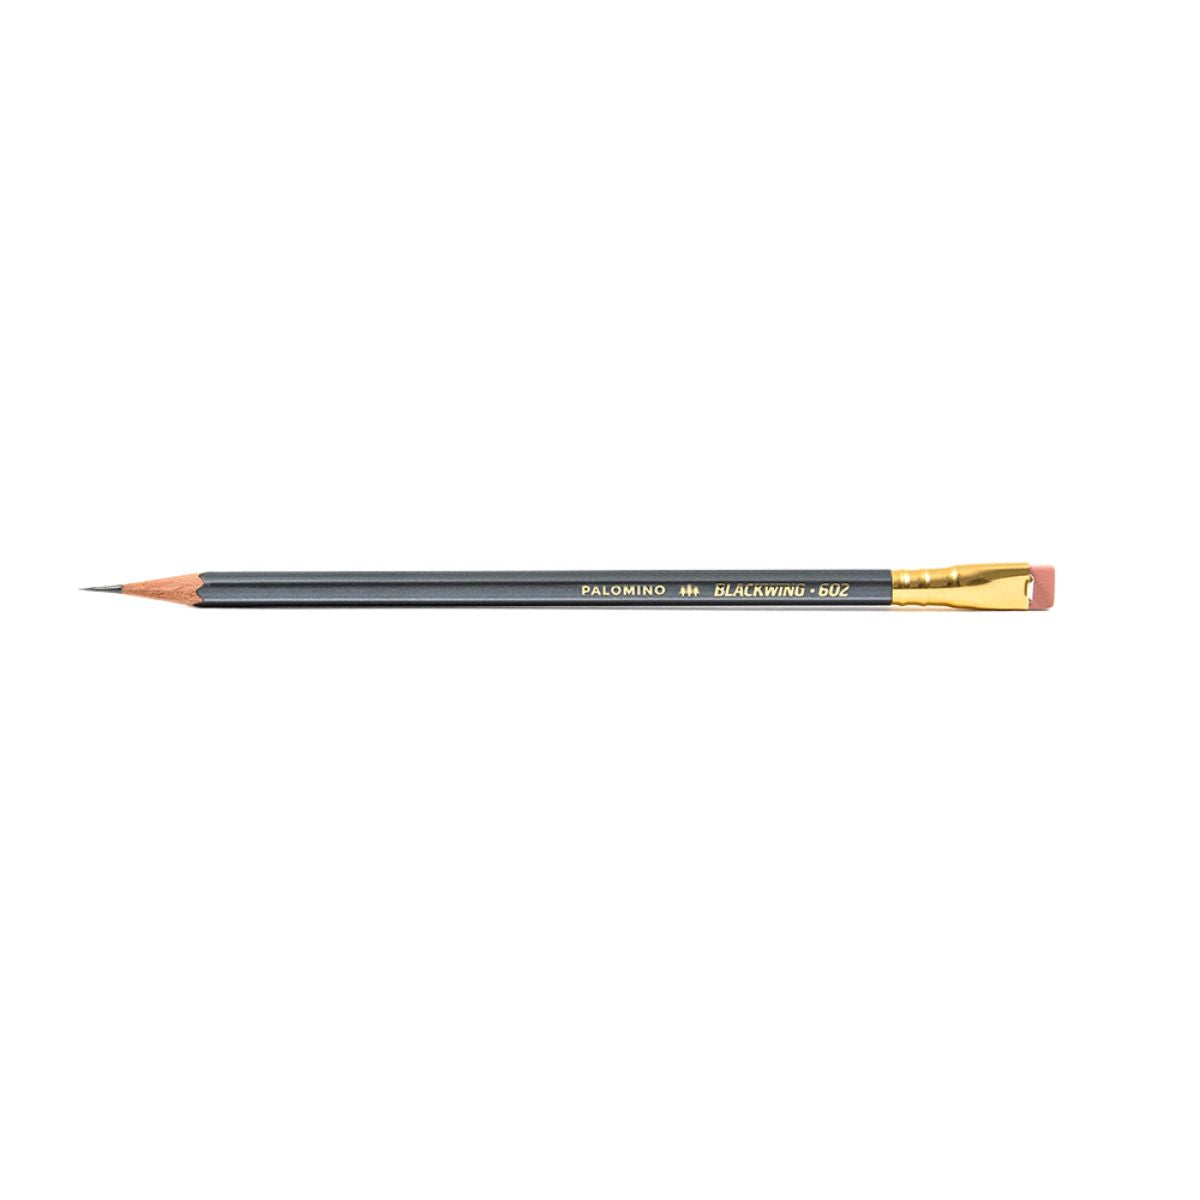 Palomino : Blackwing Pencils - Palomino : Blackwing - Palomino - Brands